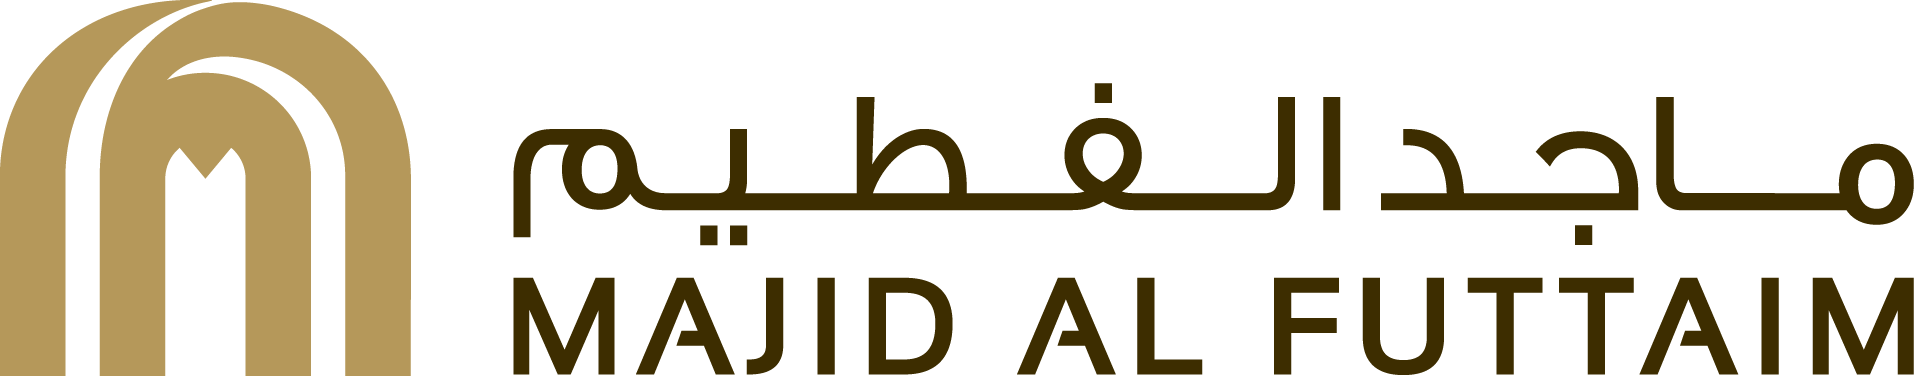 MAF-Logo---Gold-text.png